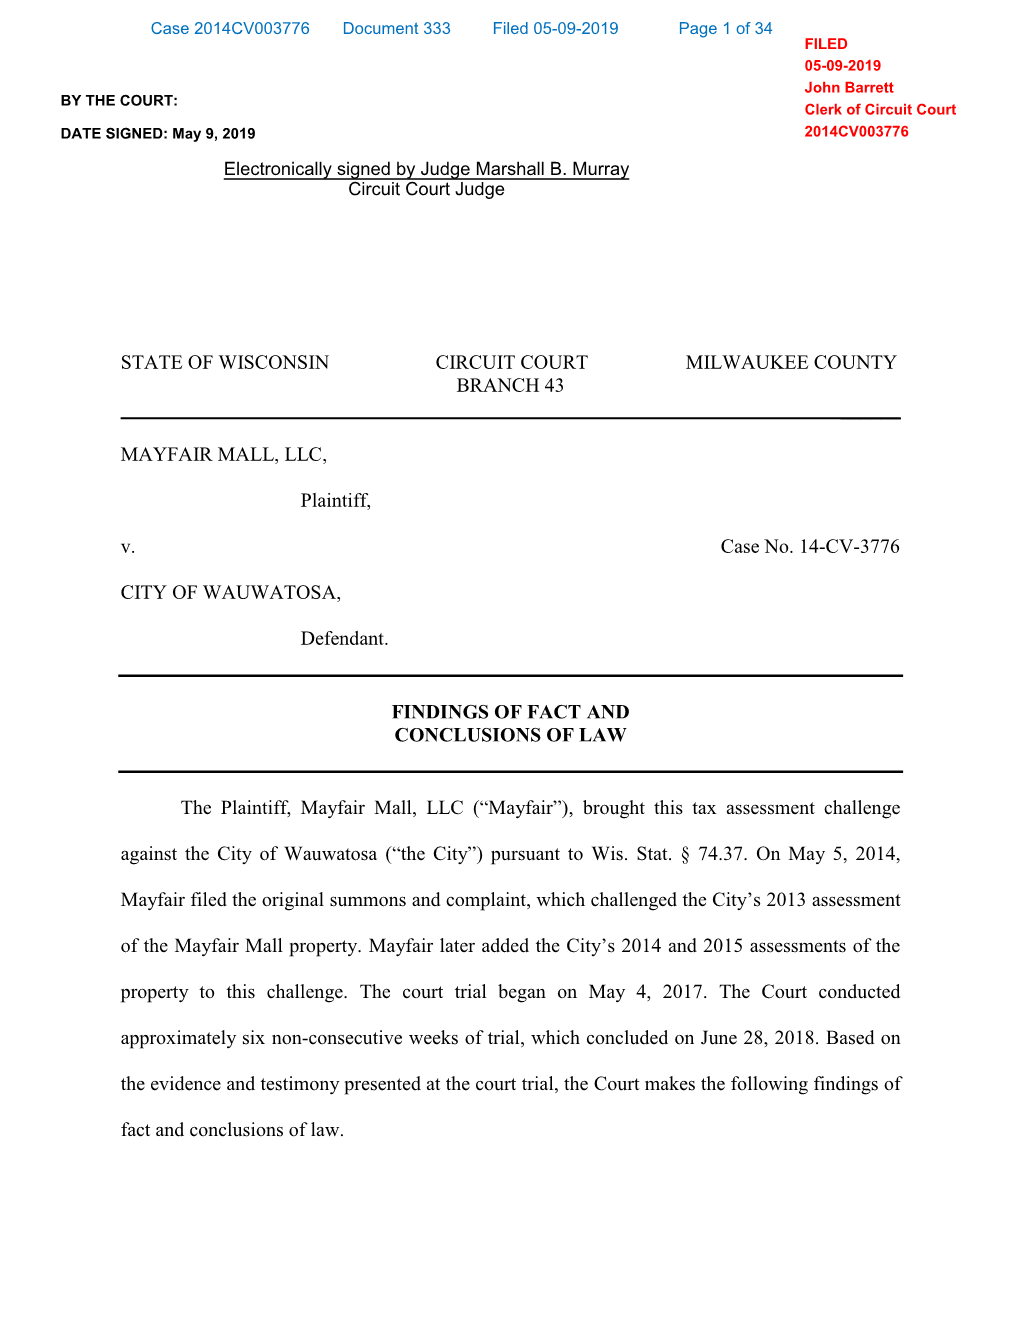 MAYFAIR MALL, LLC, Plaintiff, V. Case No. 14-CV-3776 CITY